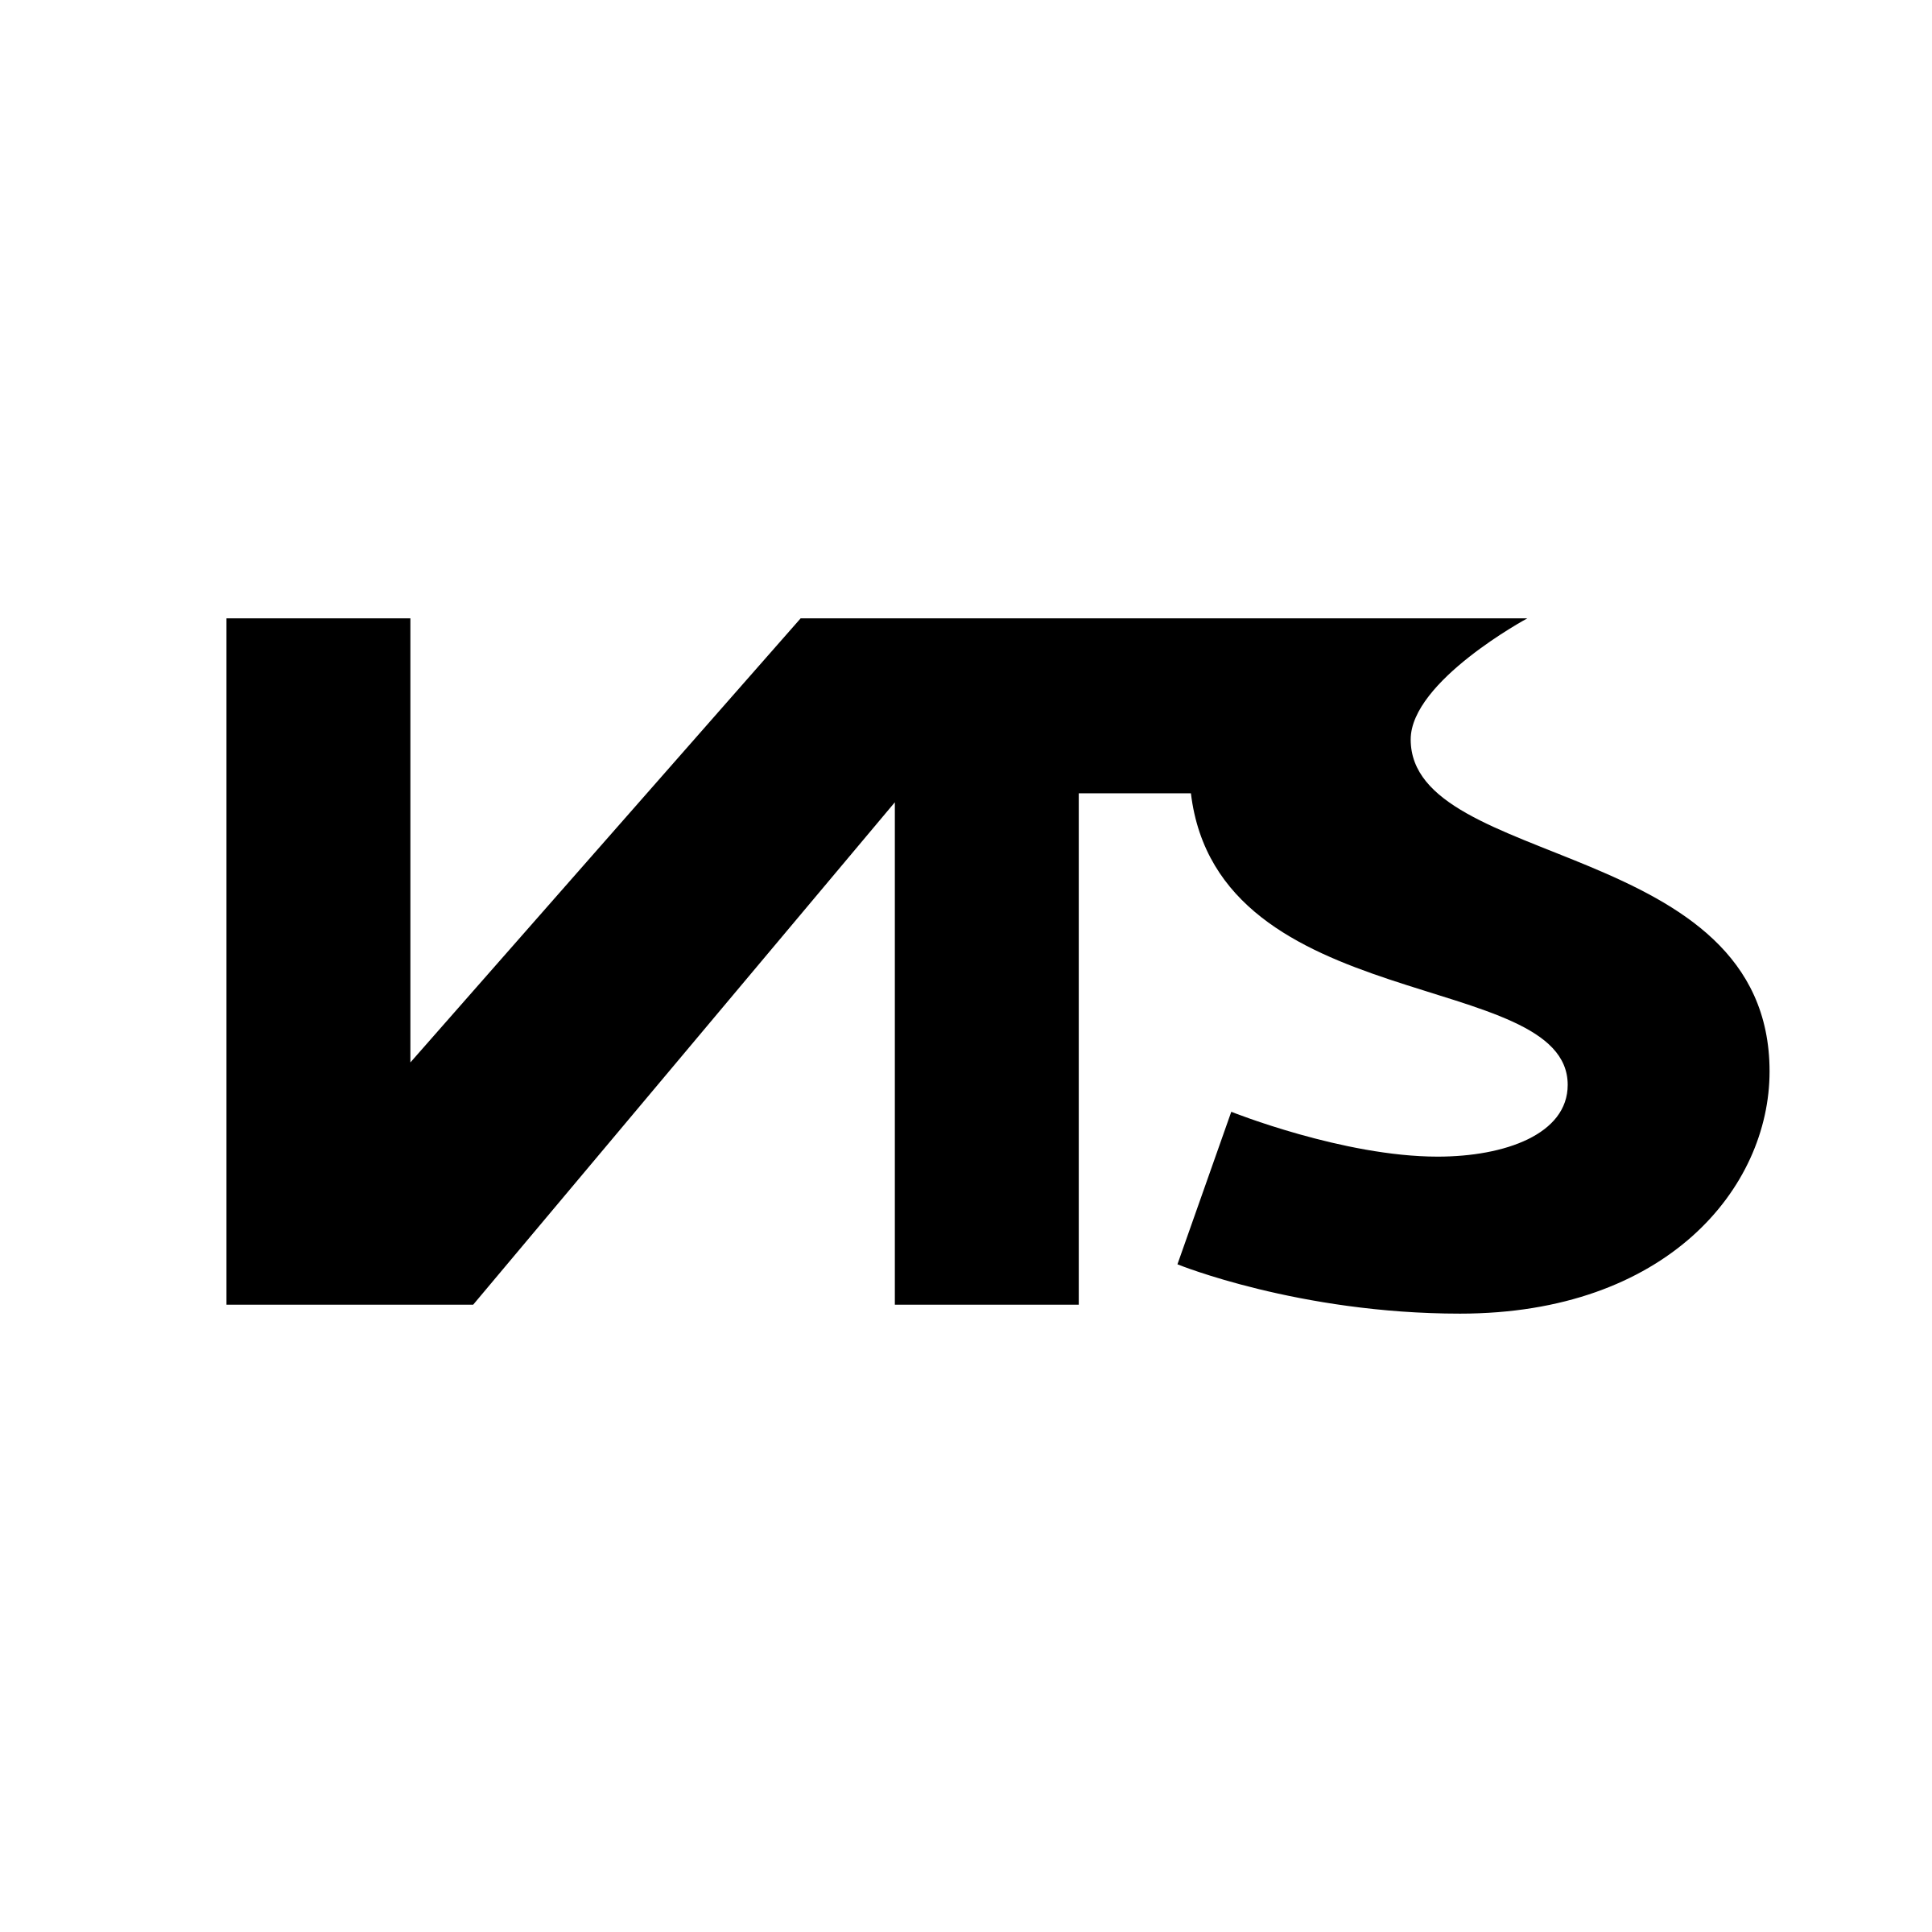 VTS Logo - VTS Logo PNG Transparent & SVG Vector